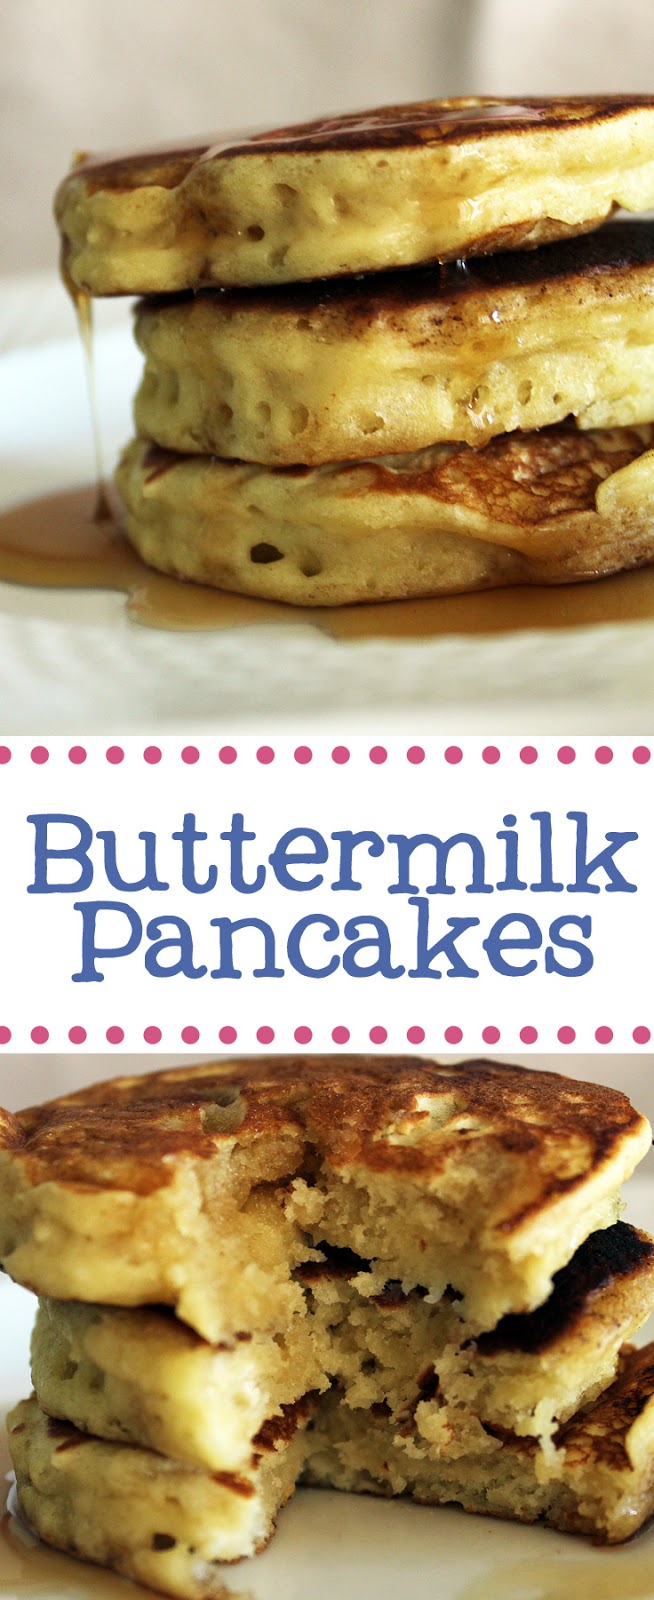 Recipe for Buttermilk Pancakes by freshfromthe.com